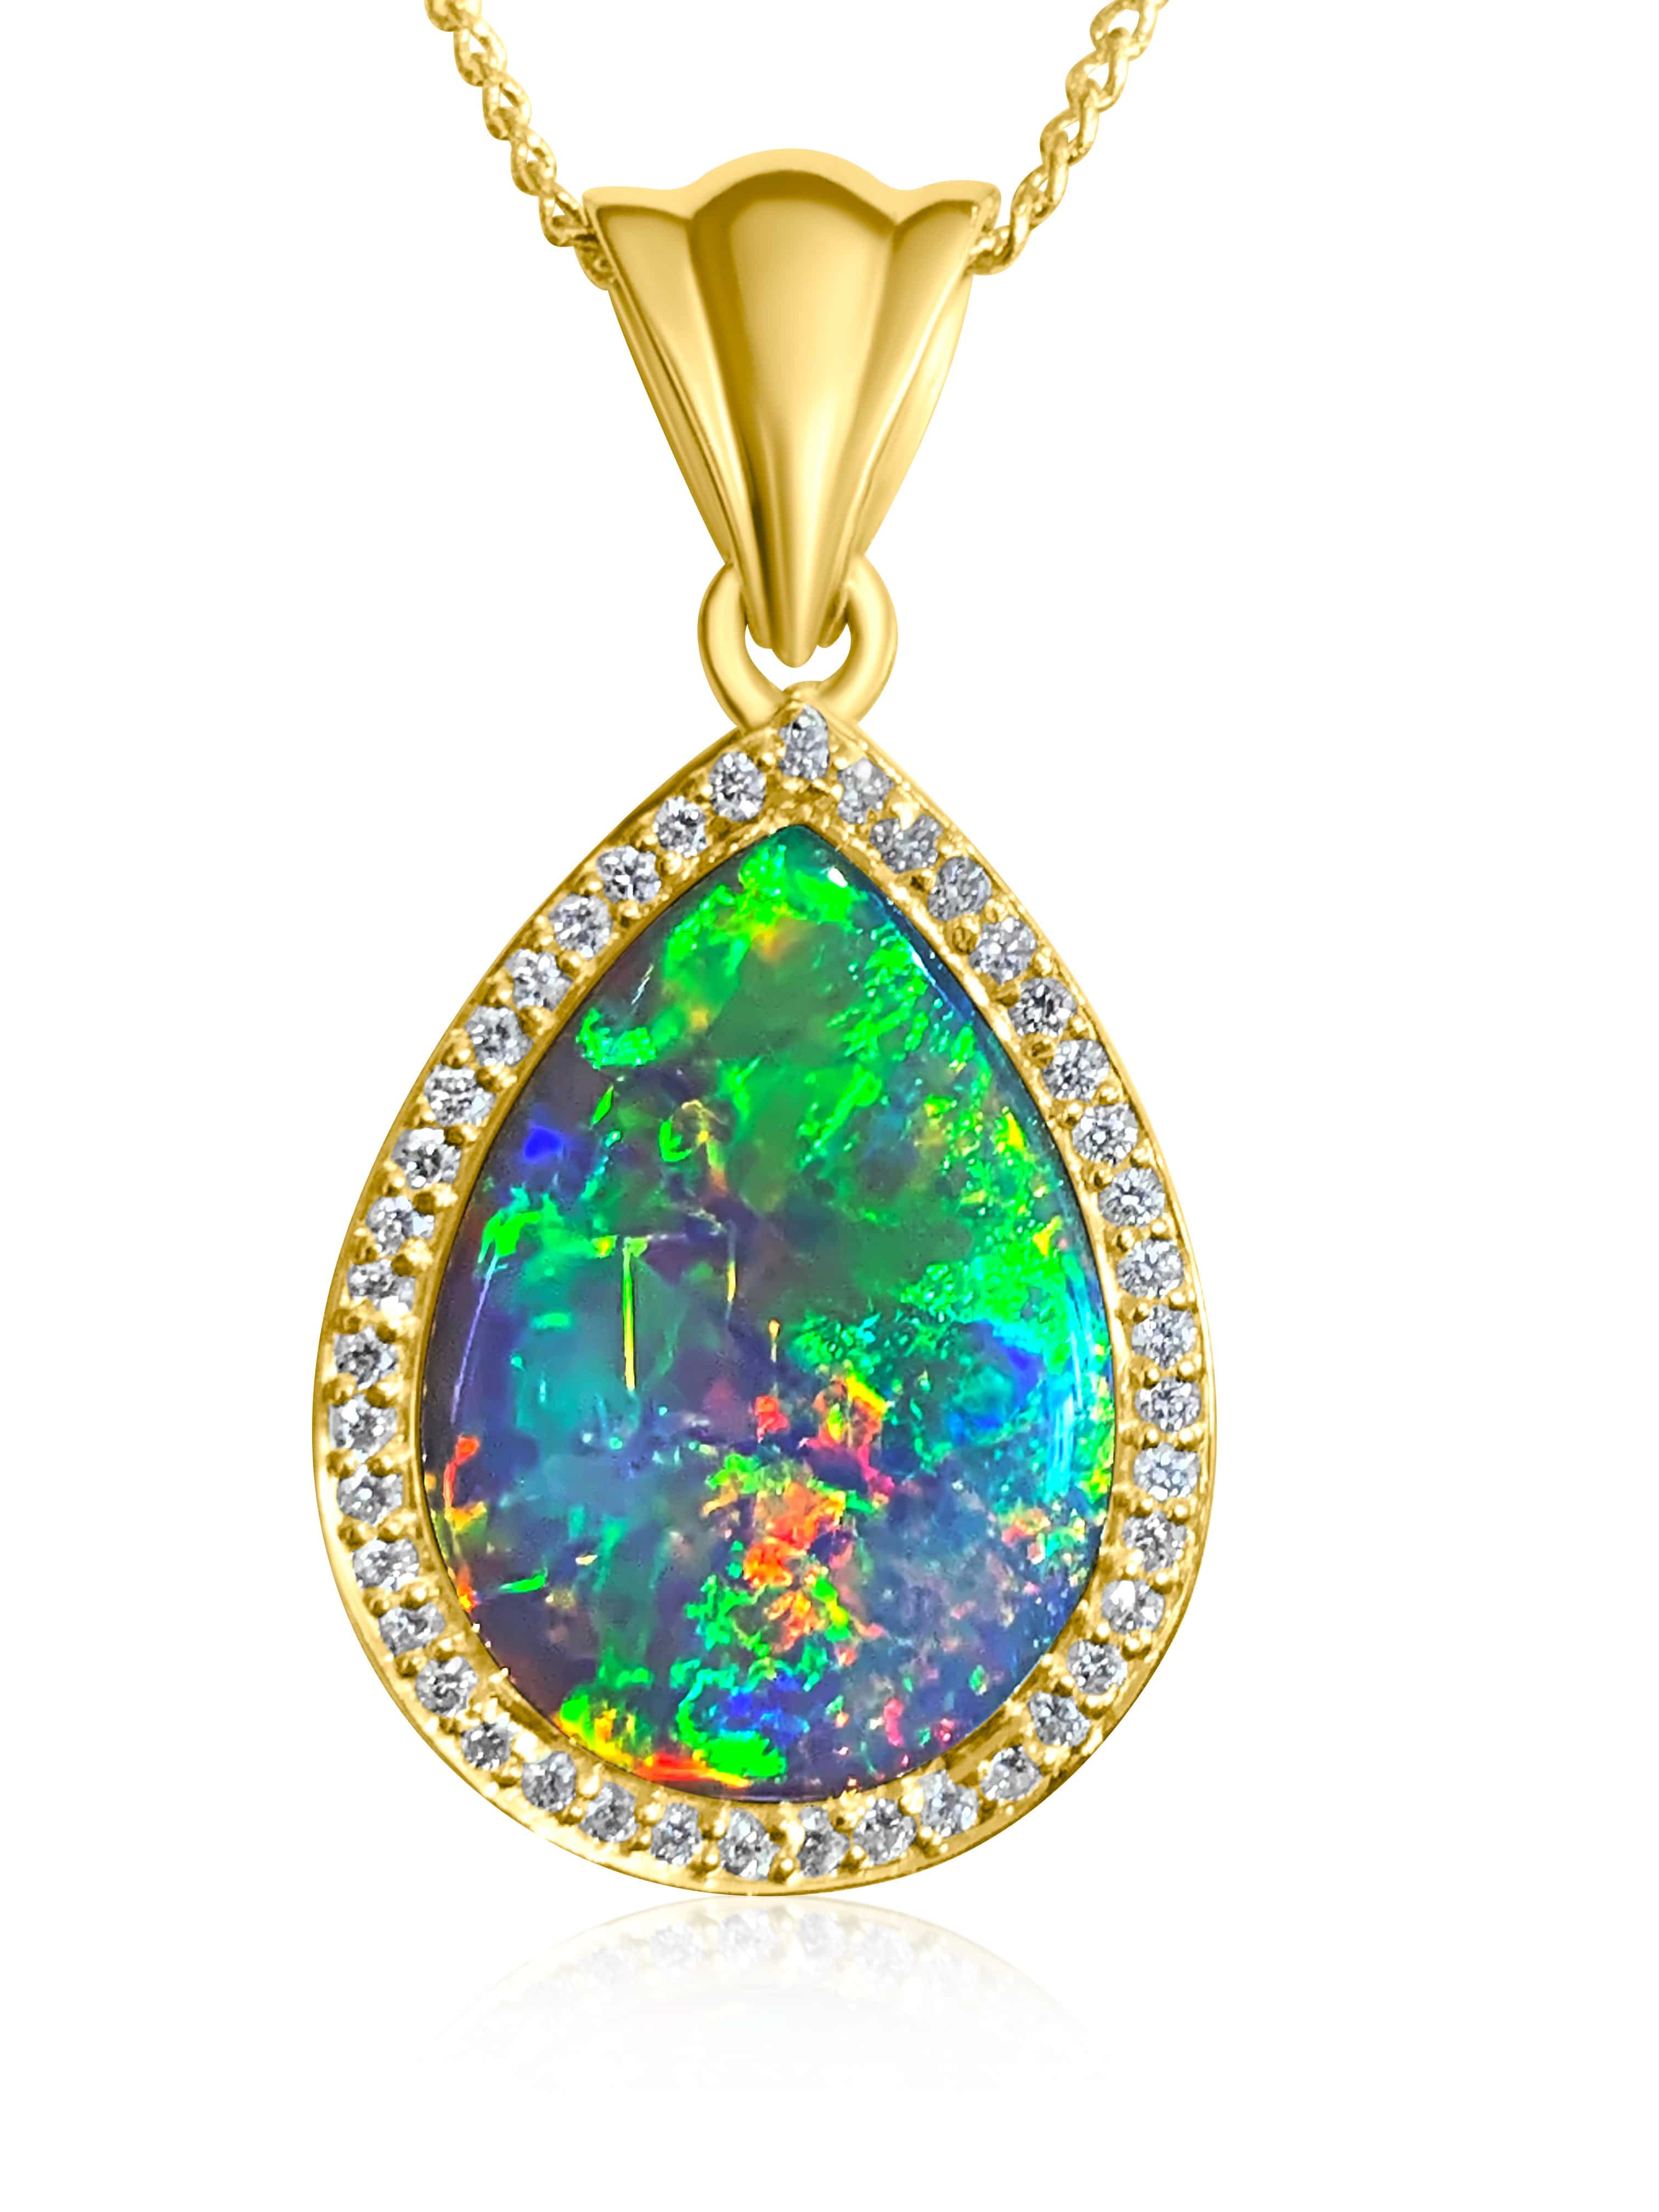 18kt Yellow Gold cluster pendant with Light Opal and Diamonds - Masterpiece Jewellery Opal & Gems Sydney Australia | Online Shop